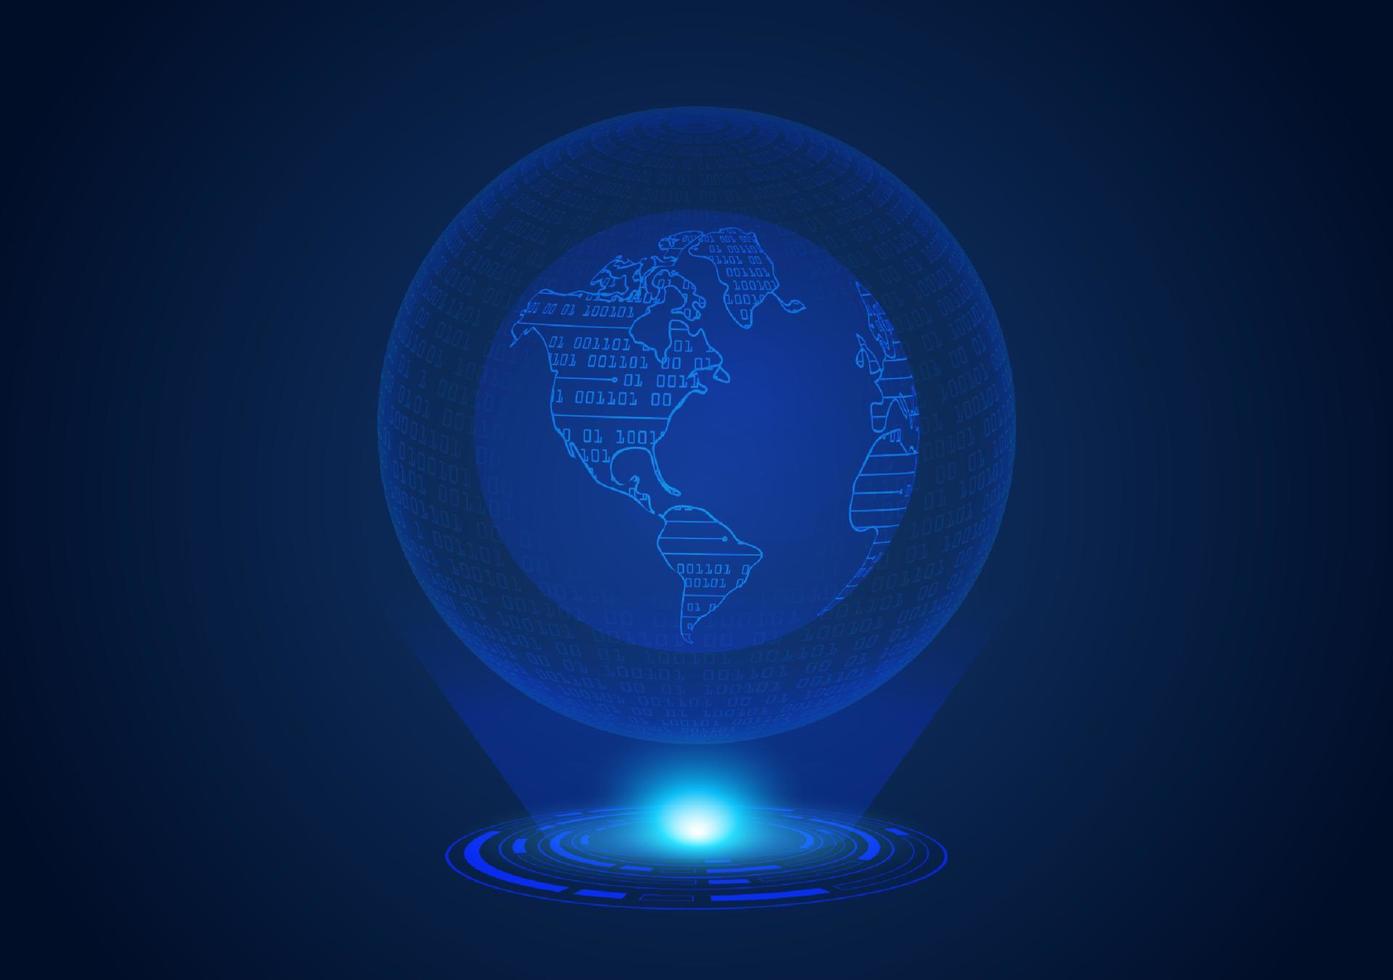 globe holographique moderne bleu vecteur